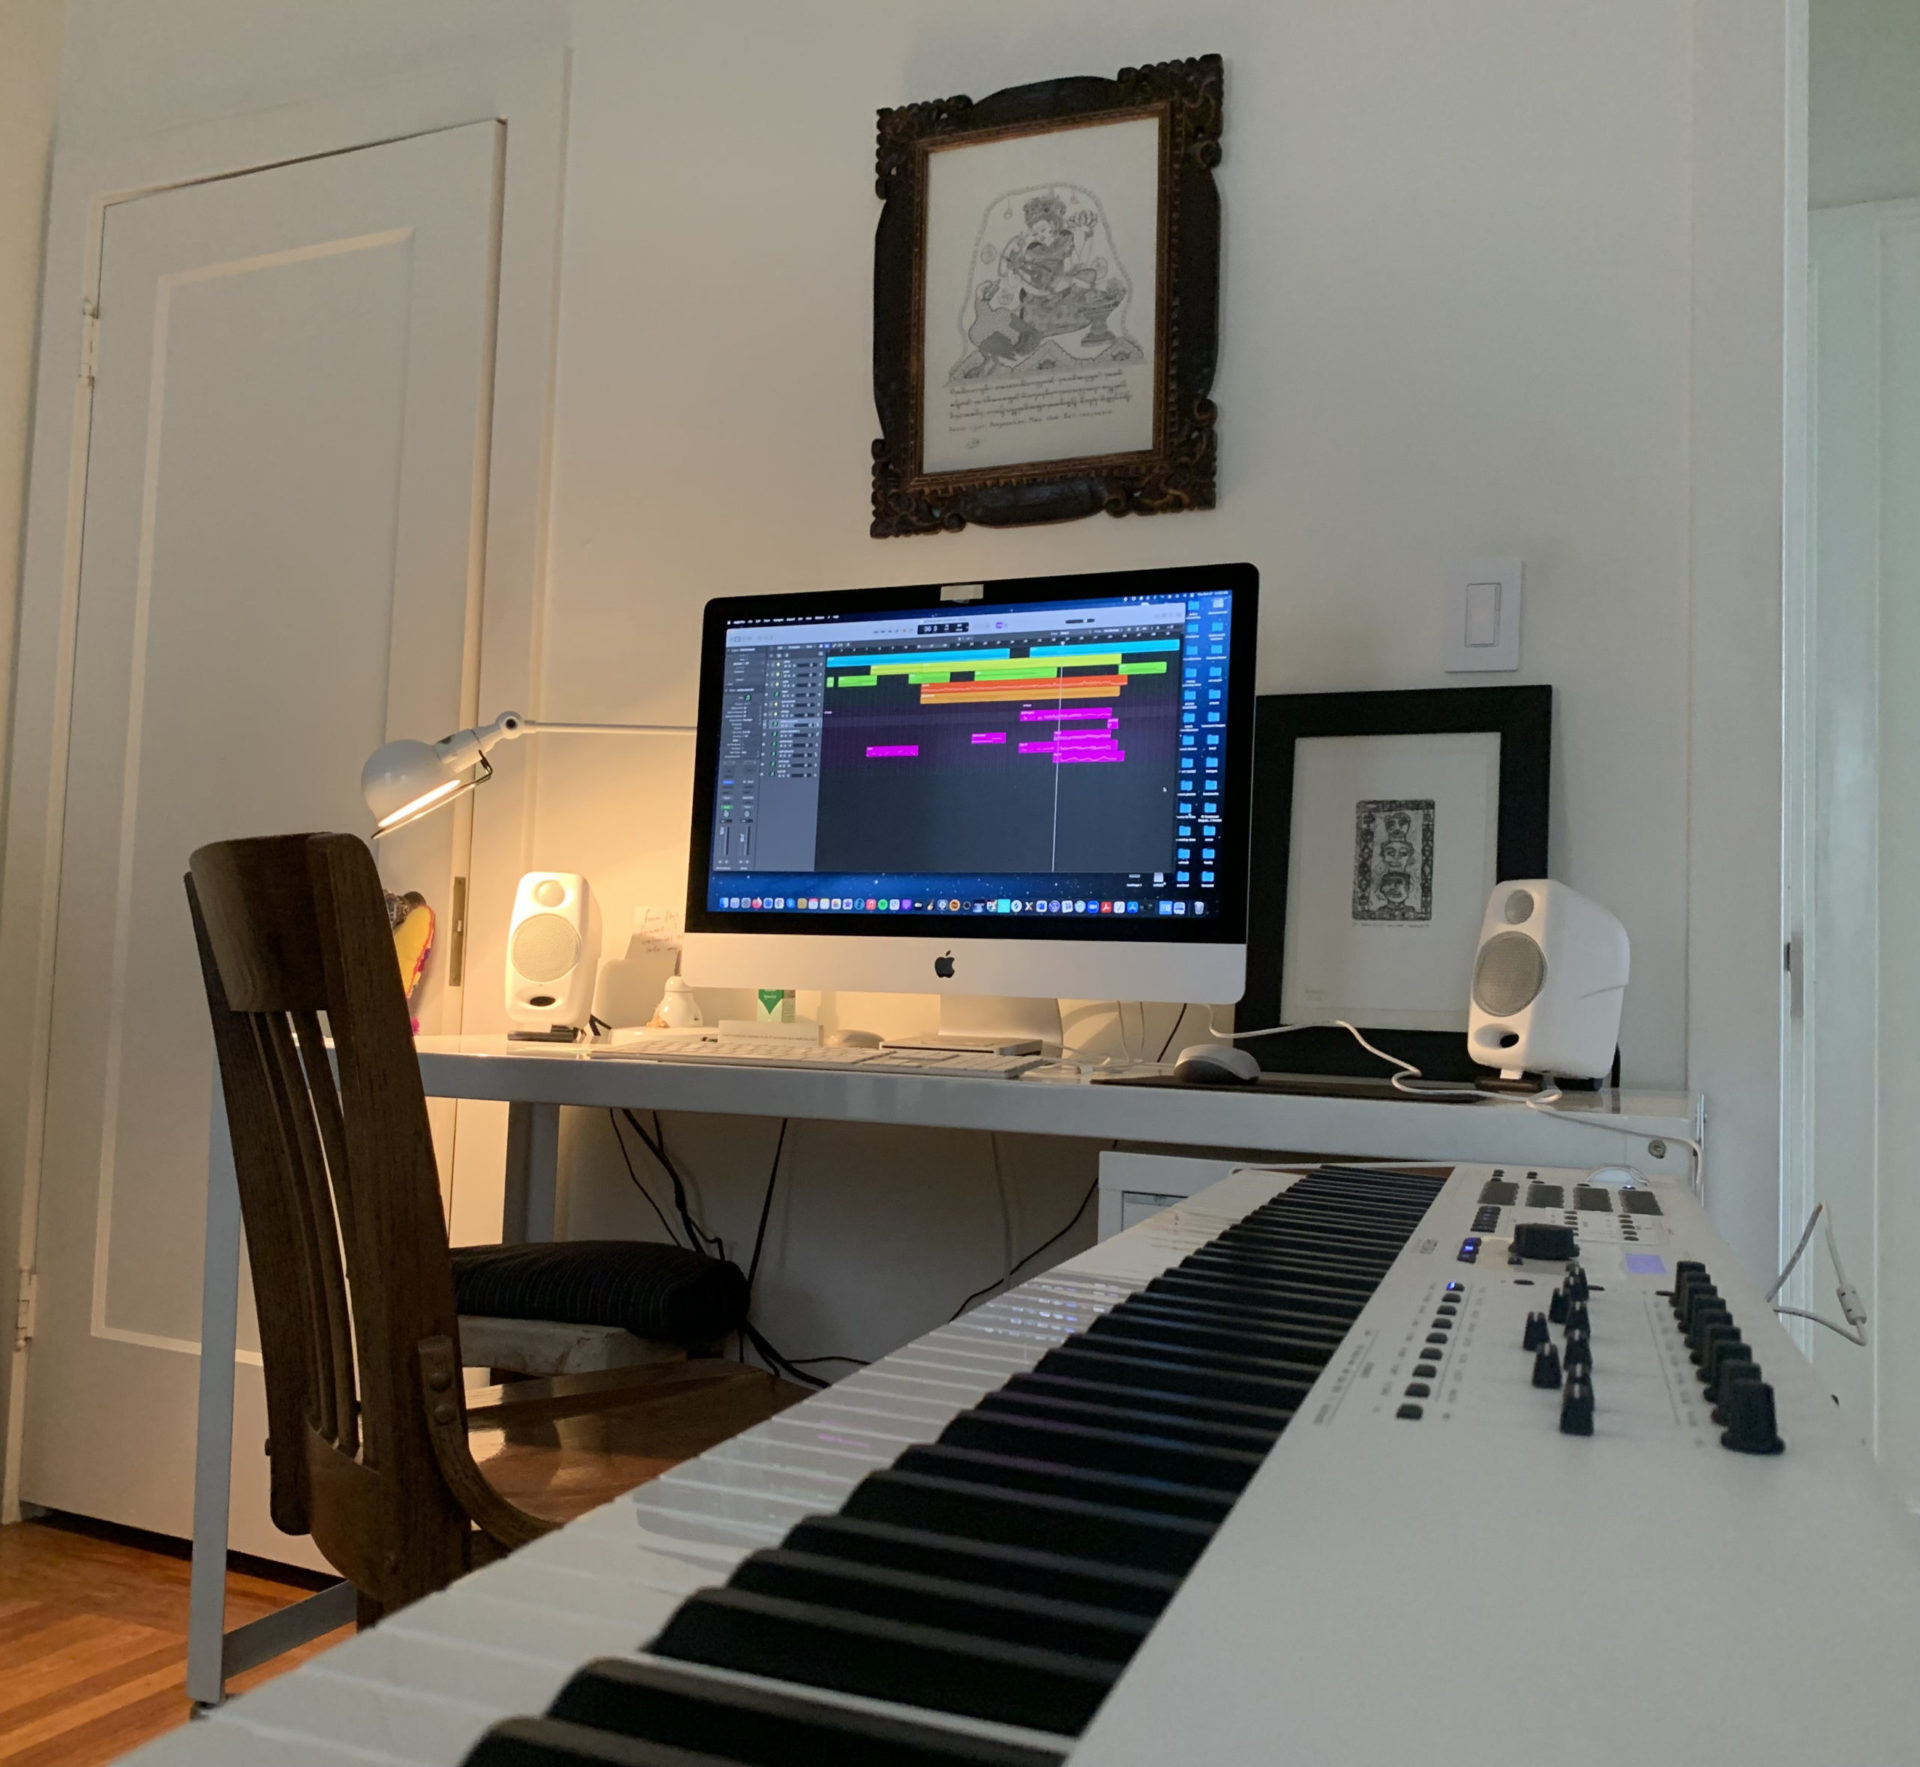 Alexis Walter Blaess' keyboard in his home studio